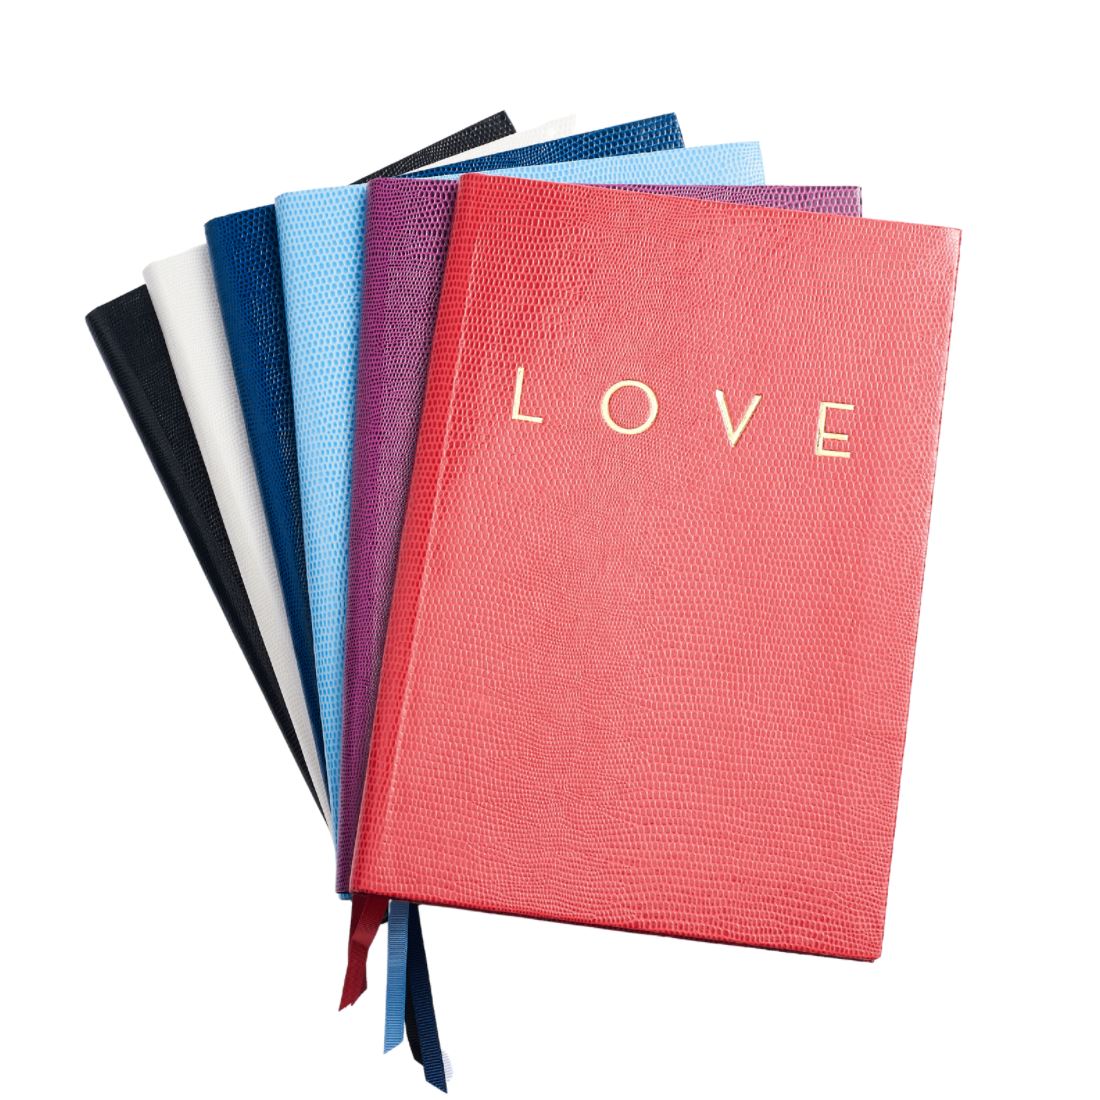 Love Journal Journals Sloane Stationery 